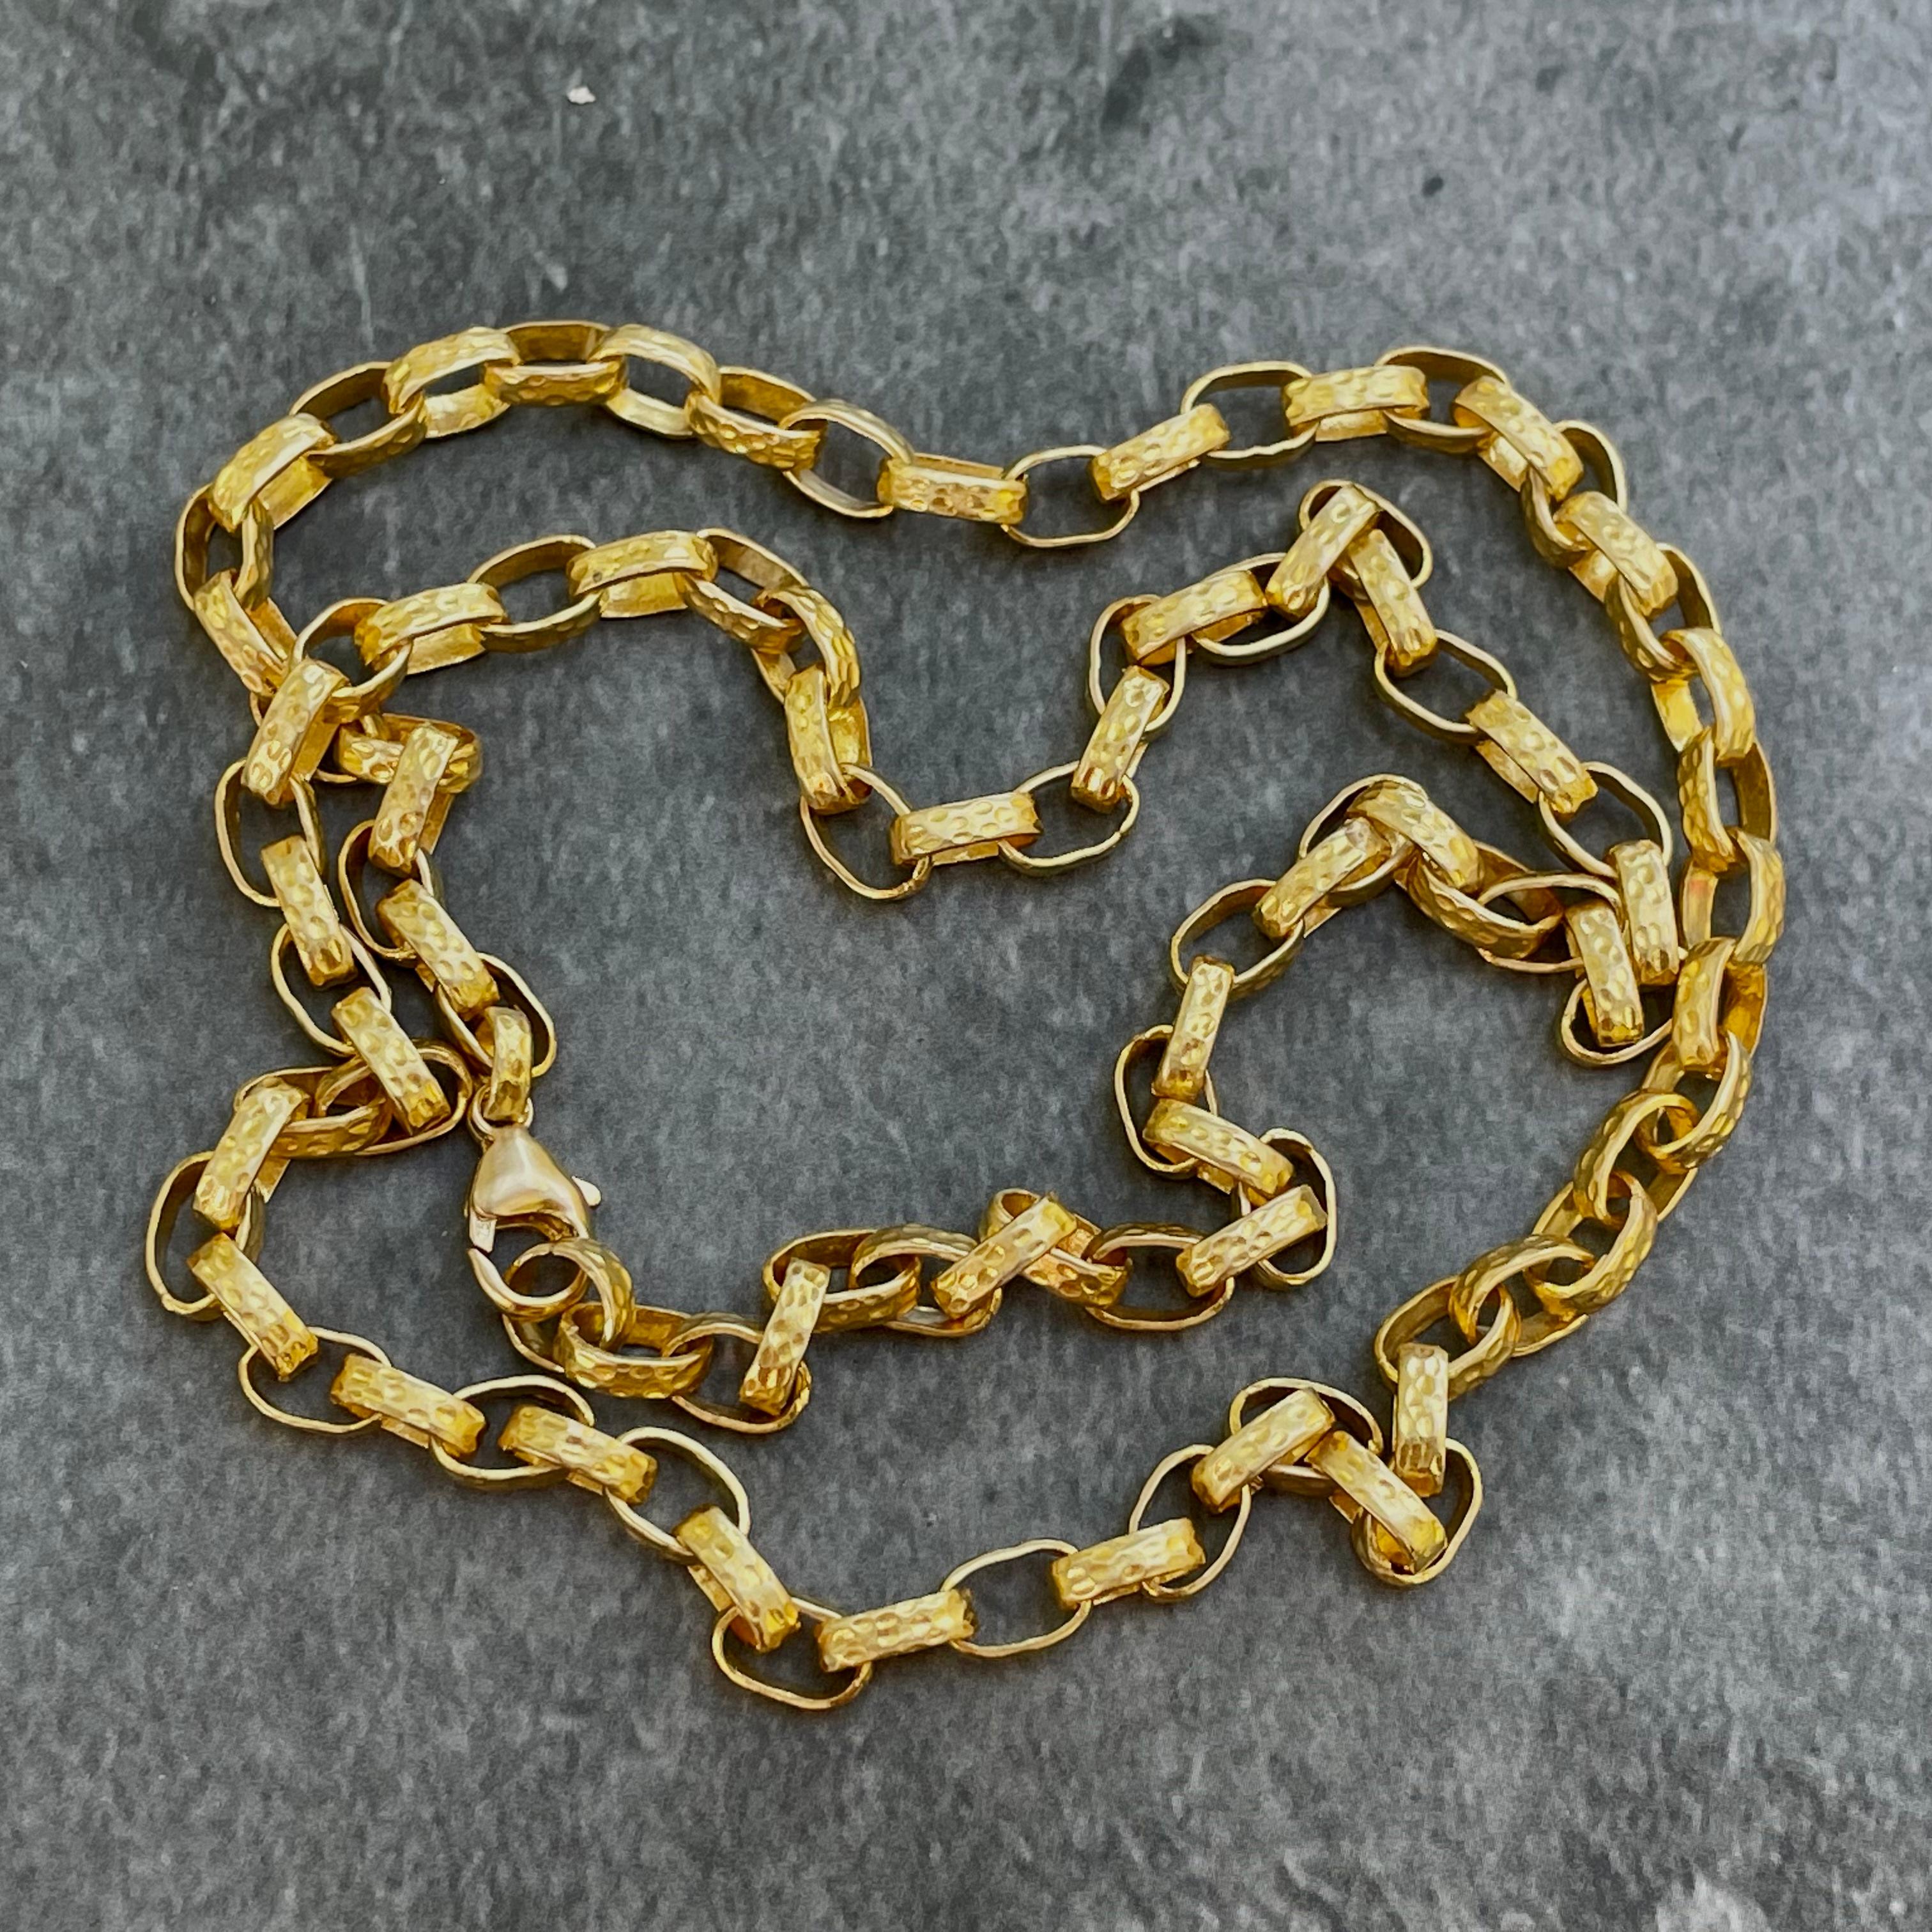 18k gold chain 22 inch